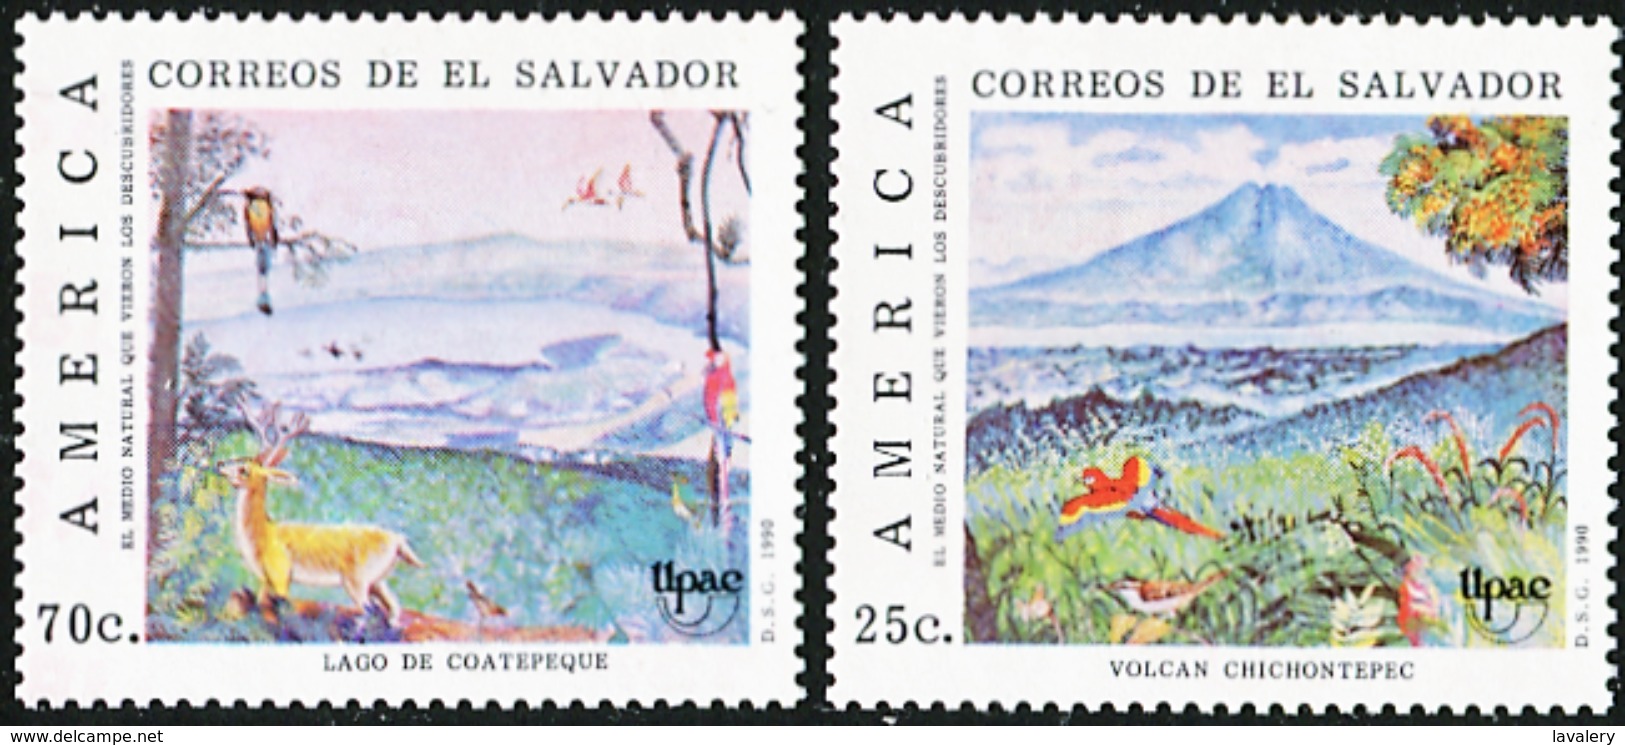 EL SALVADOR 1990 Volcano, Lake, Birds, Deer, Fauna MNH - El Salvador